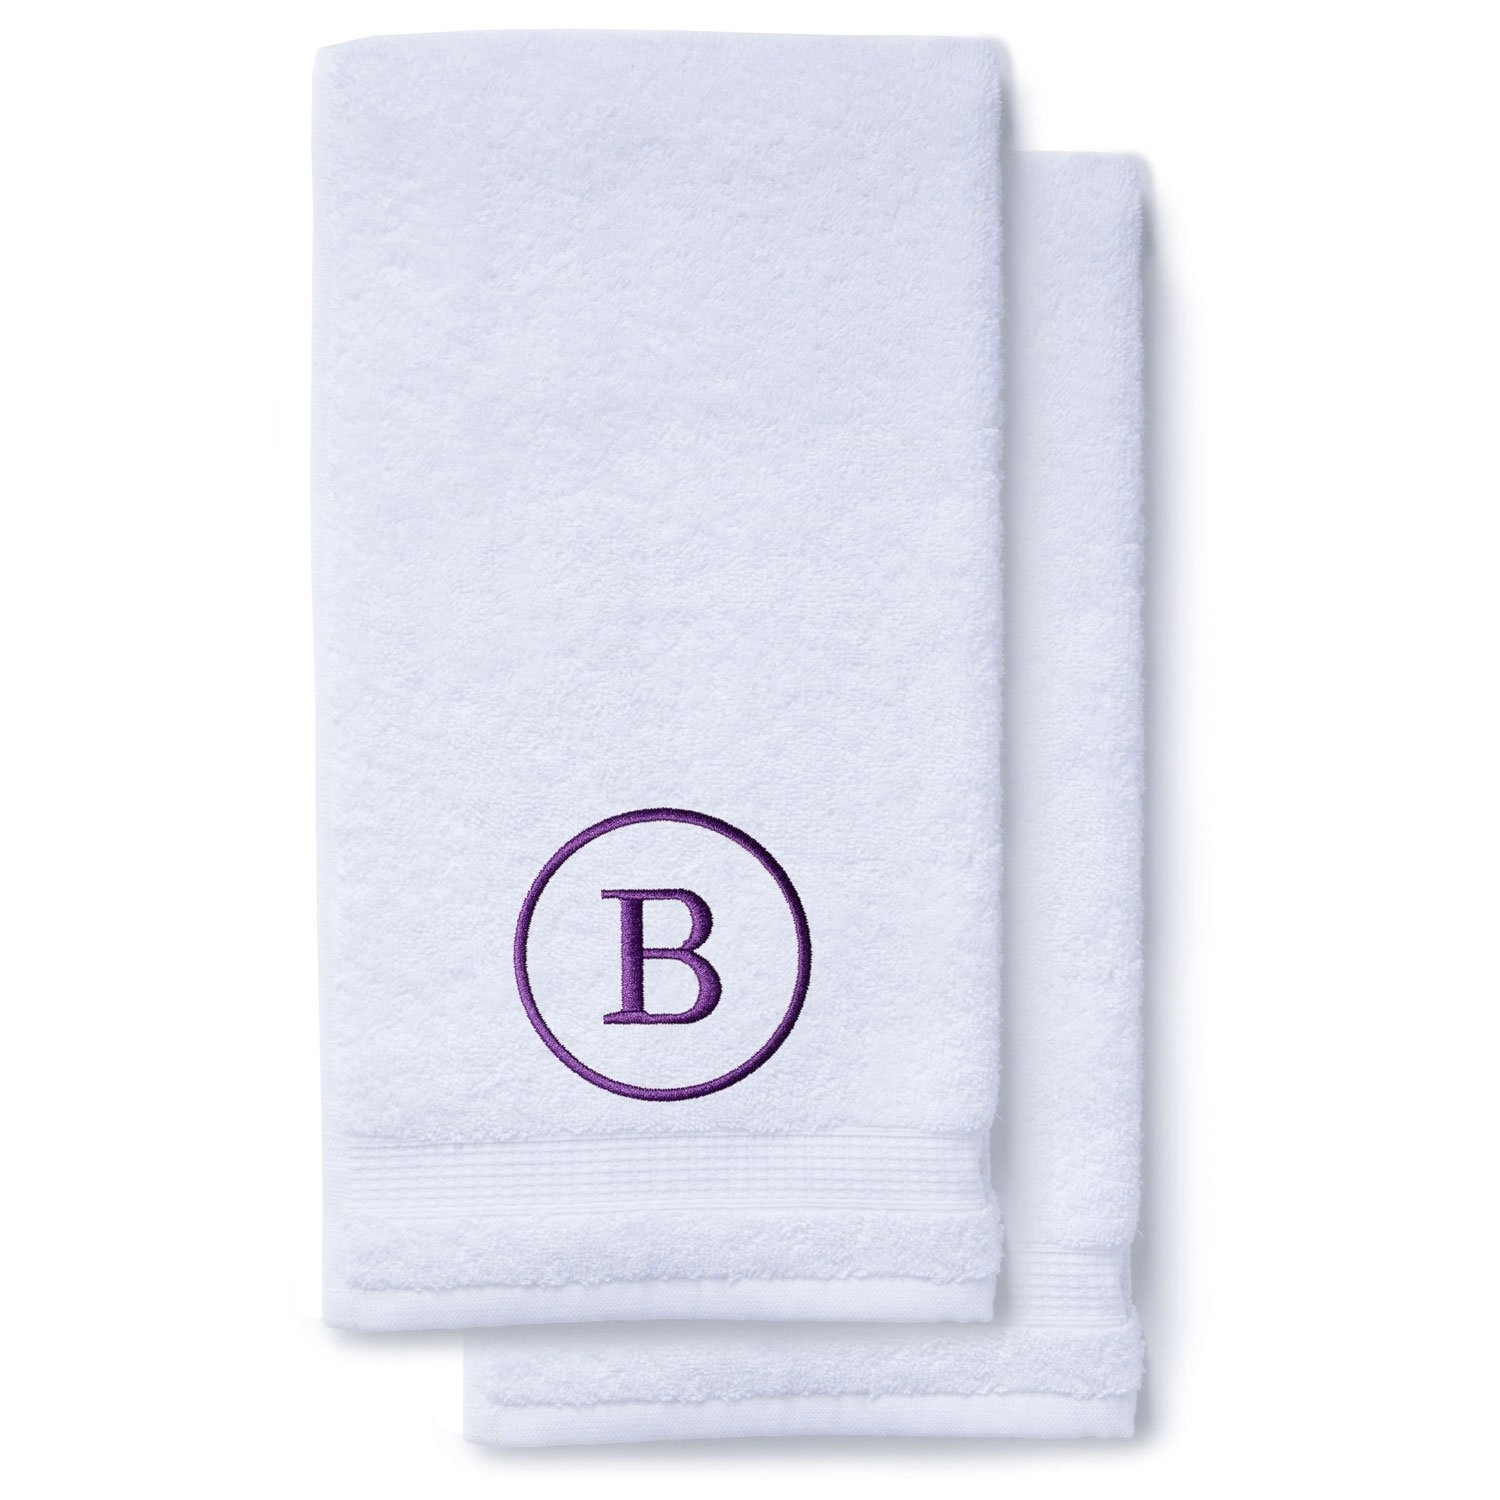 http://robemart.com/images/thumbnails/detailed/7/B-Purple-stacked-Monogrammed-Hand-Towels_1xpj-1h.webp